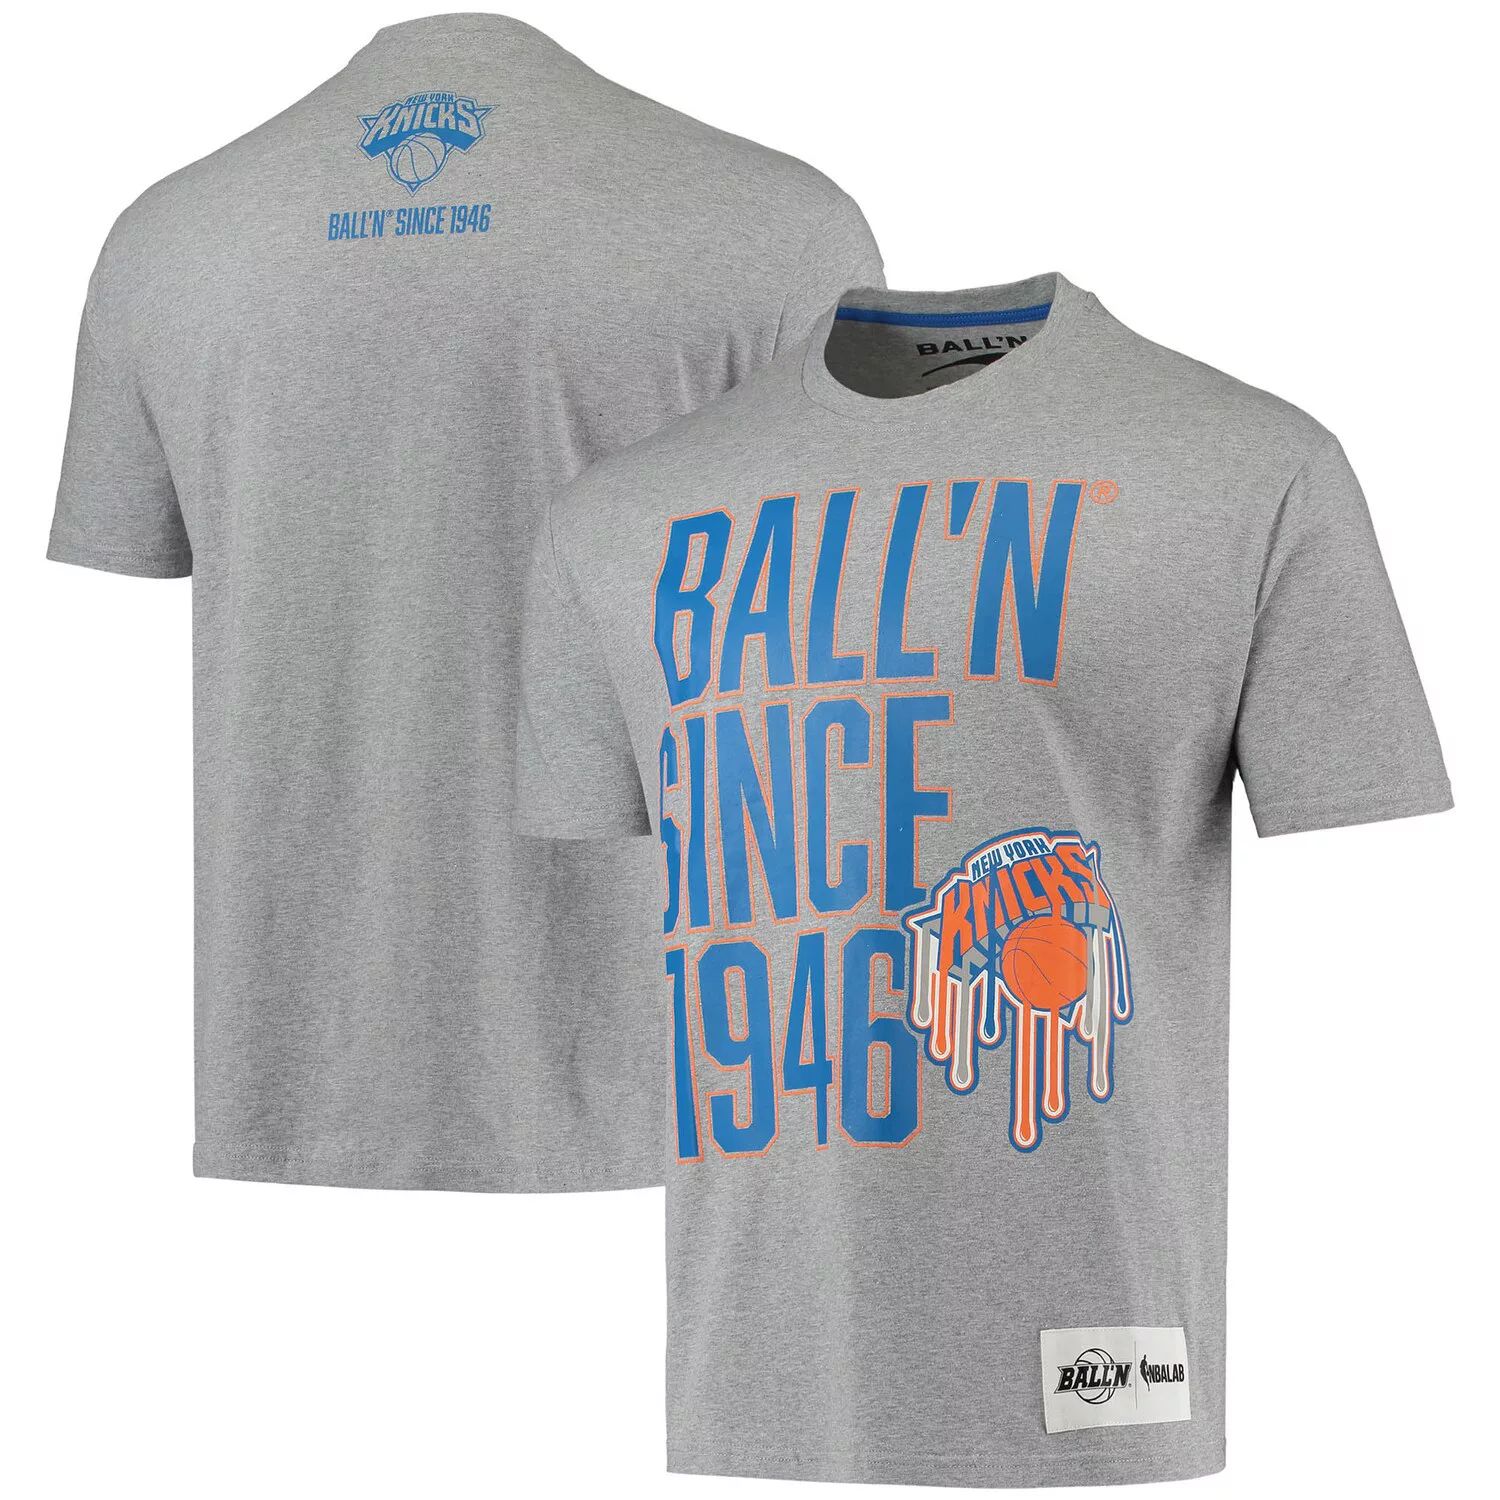 N since. Ballin футболка. Майка balls. SOLARBALLS футболка. USA since 1989.